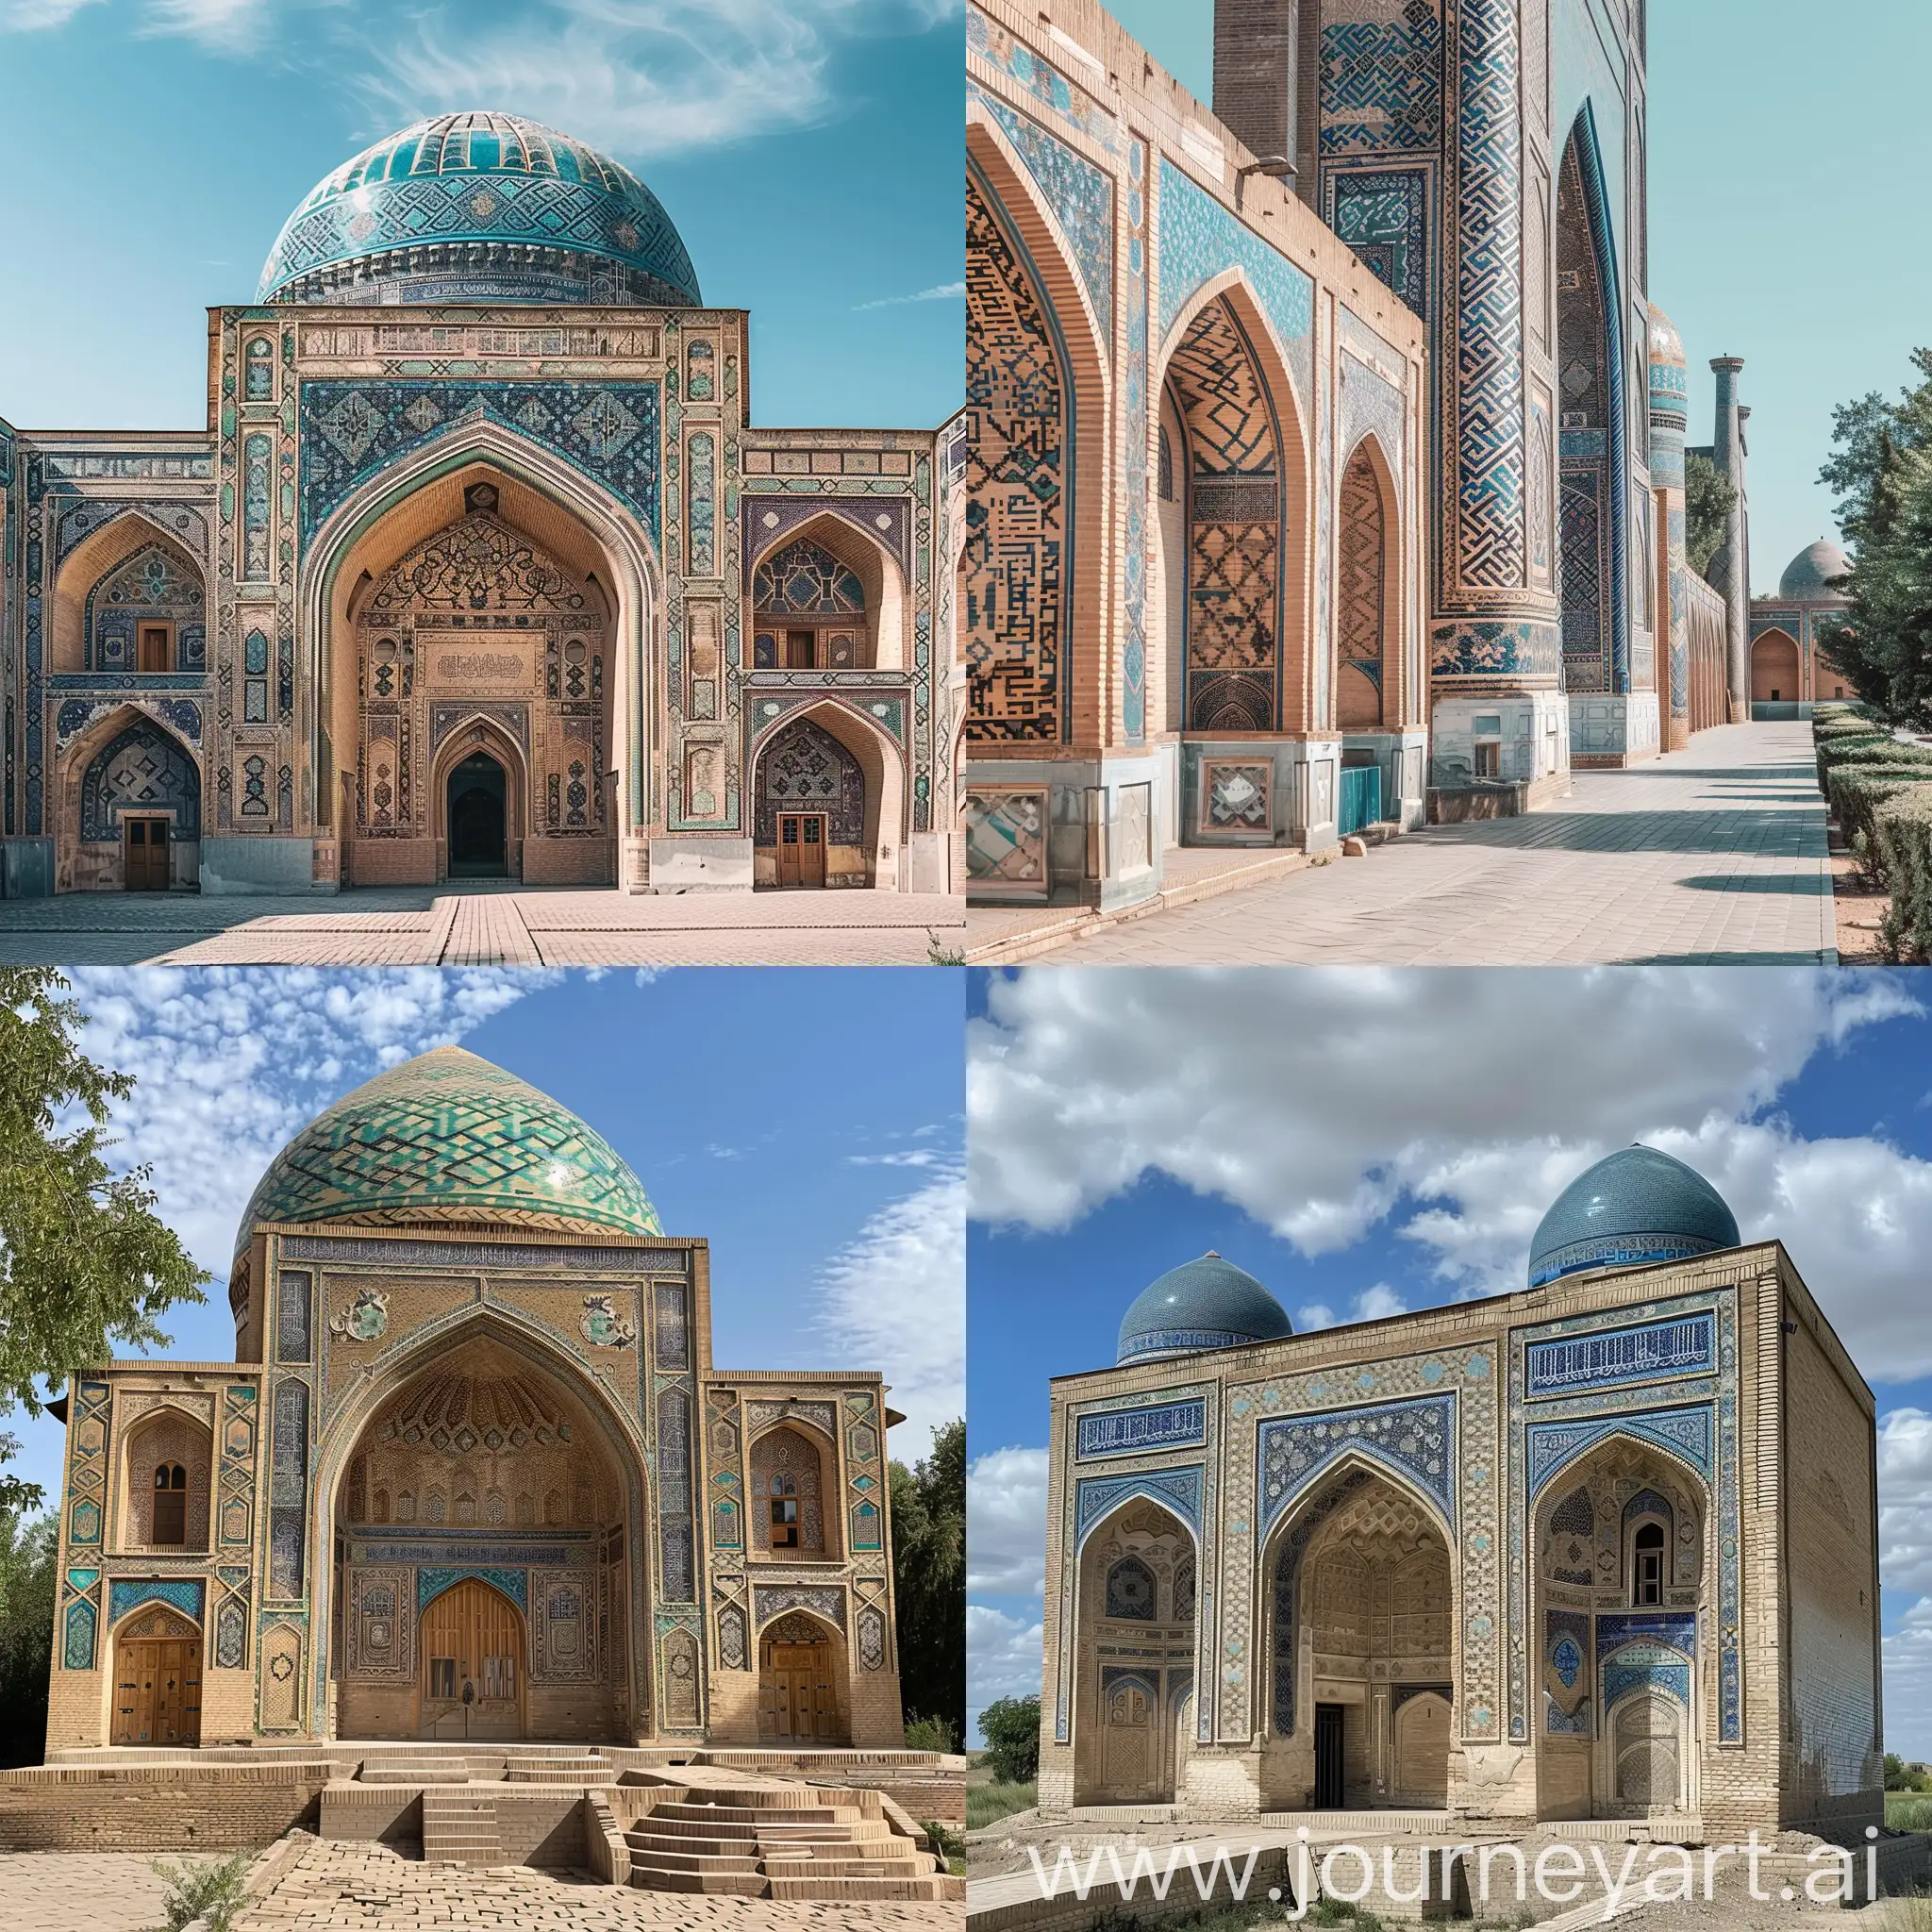 Uzbekistan around 2050s